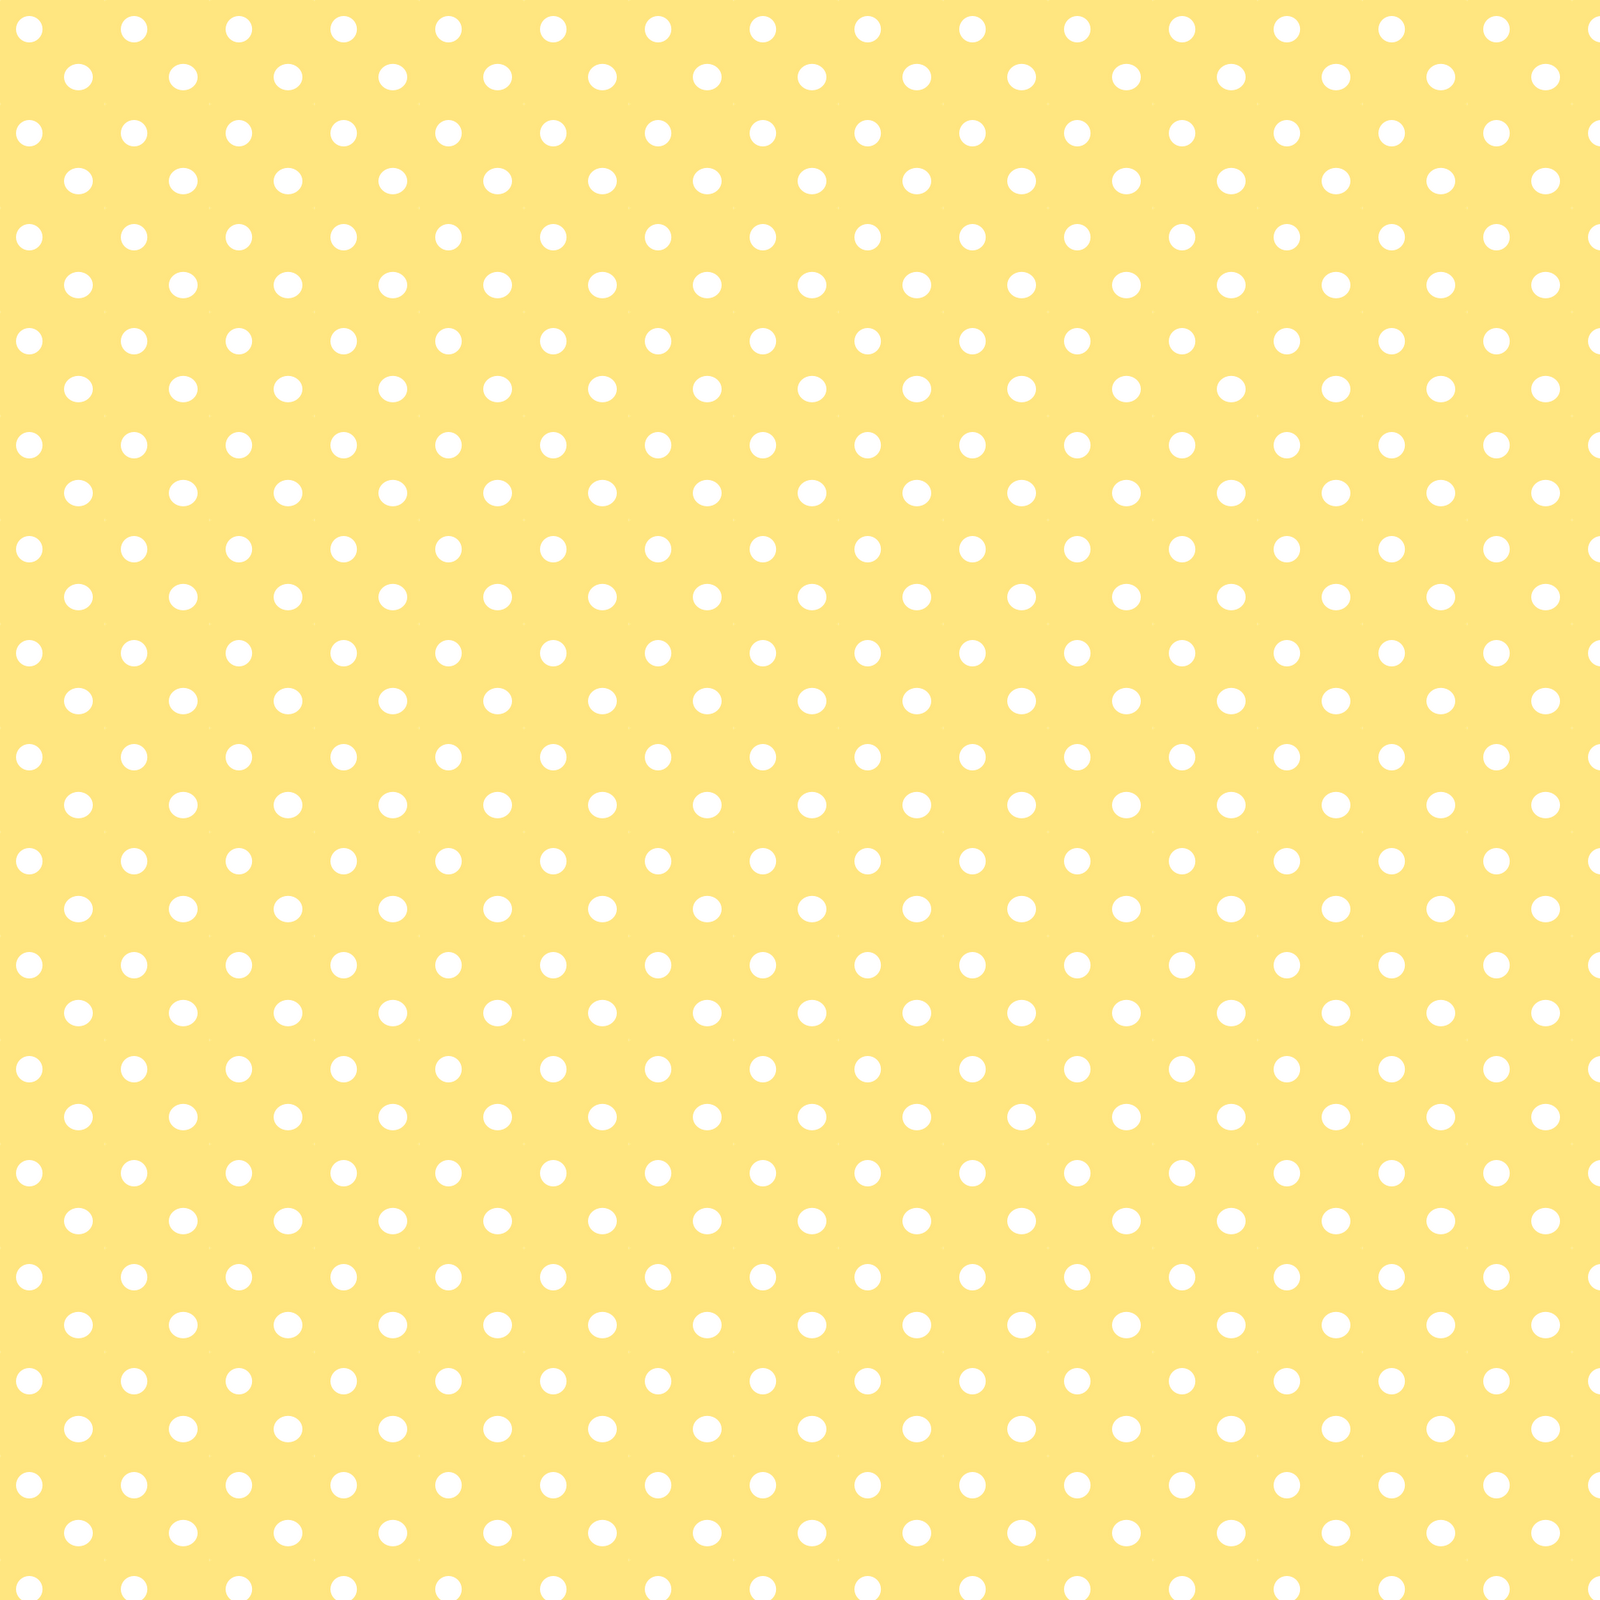 MeinLilaPark: Free polka dot scrapbook paper